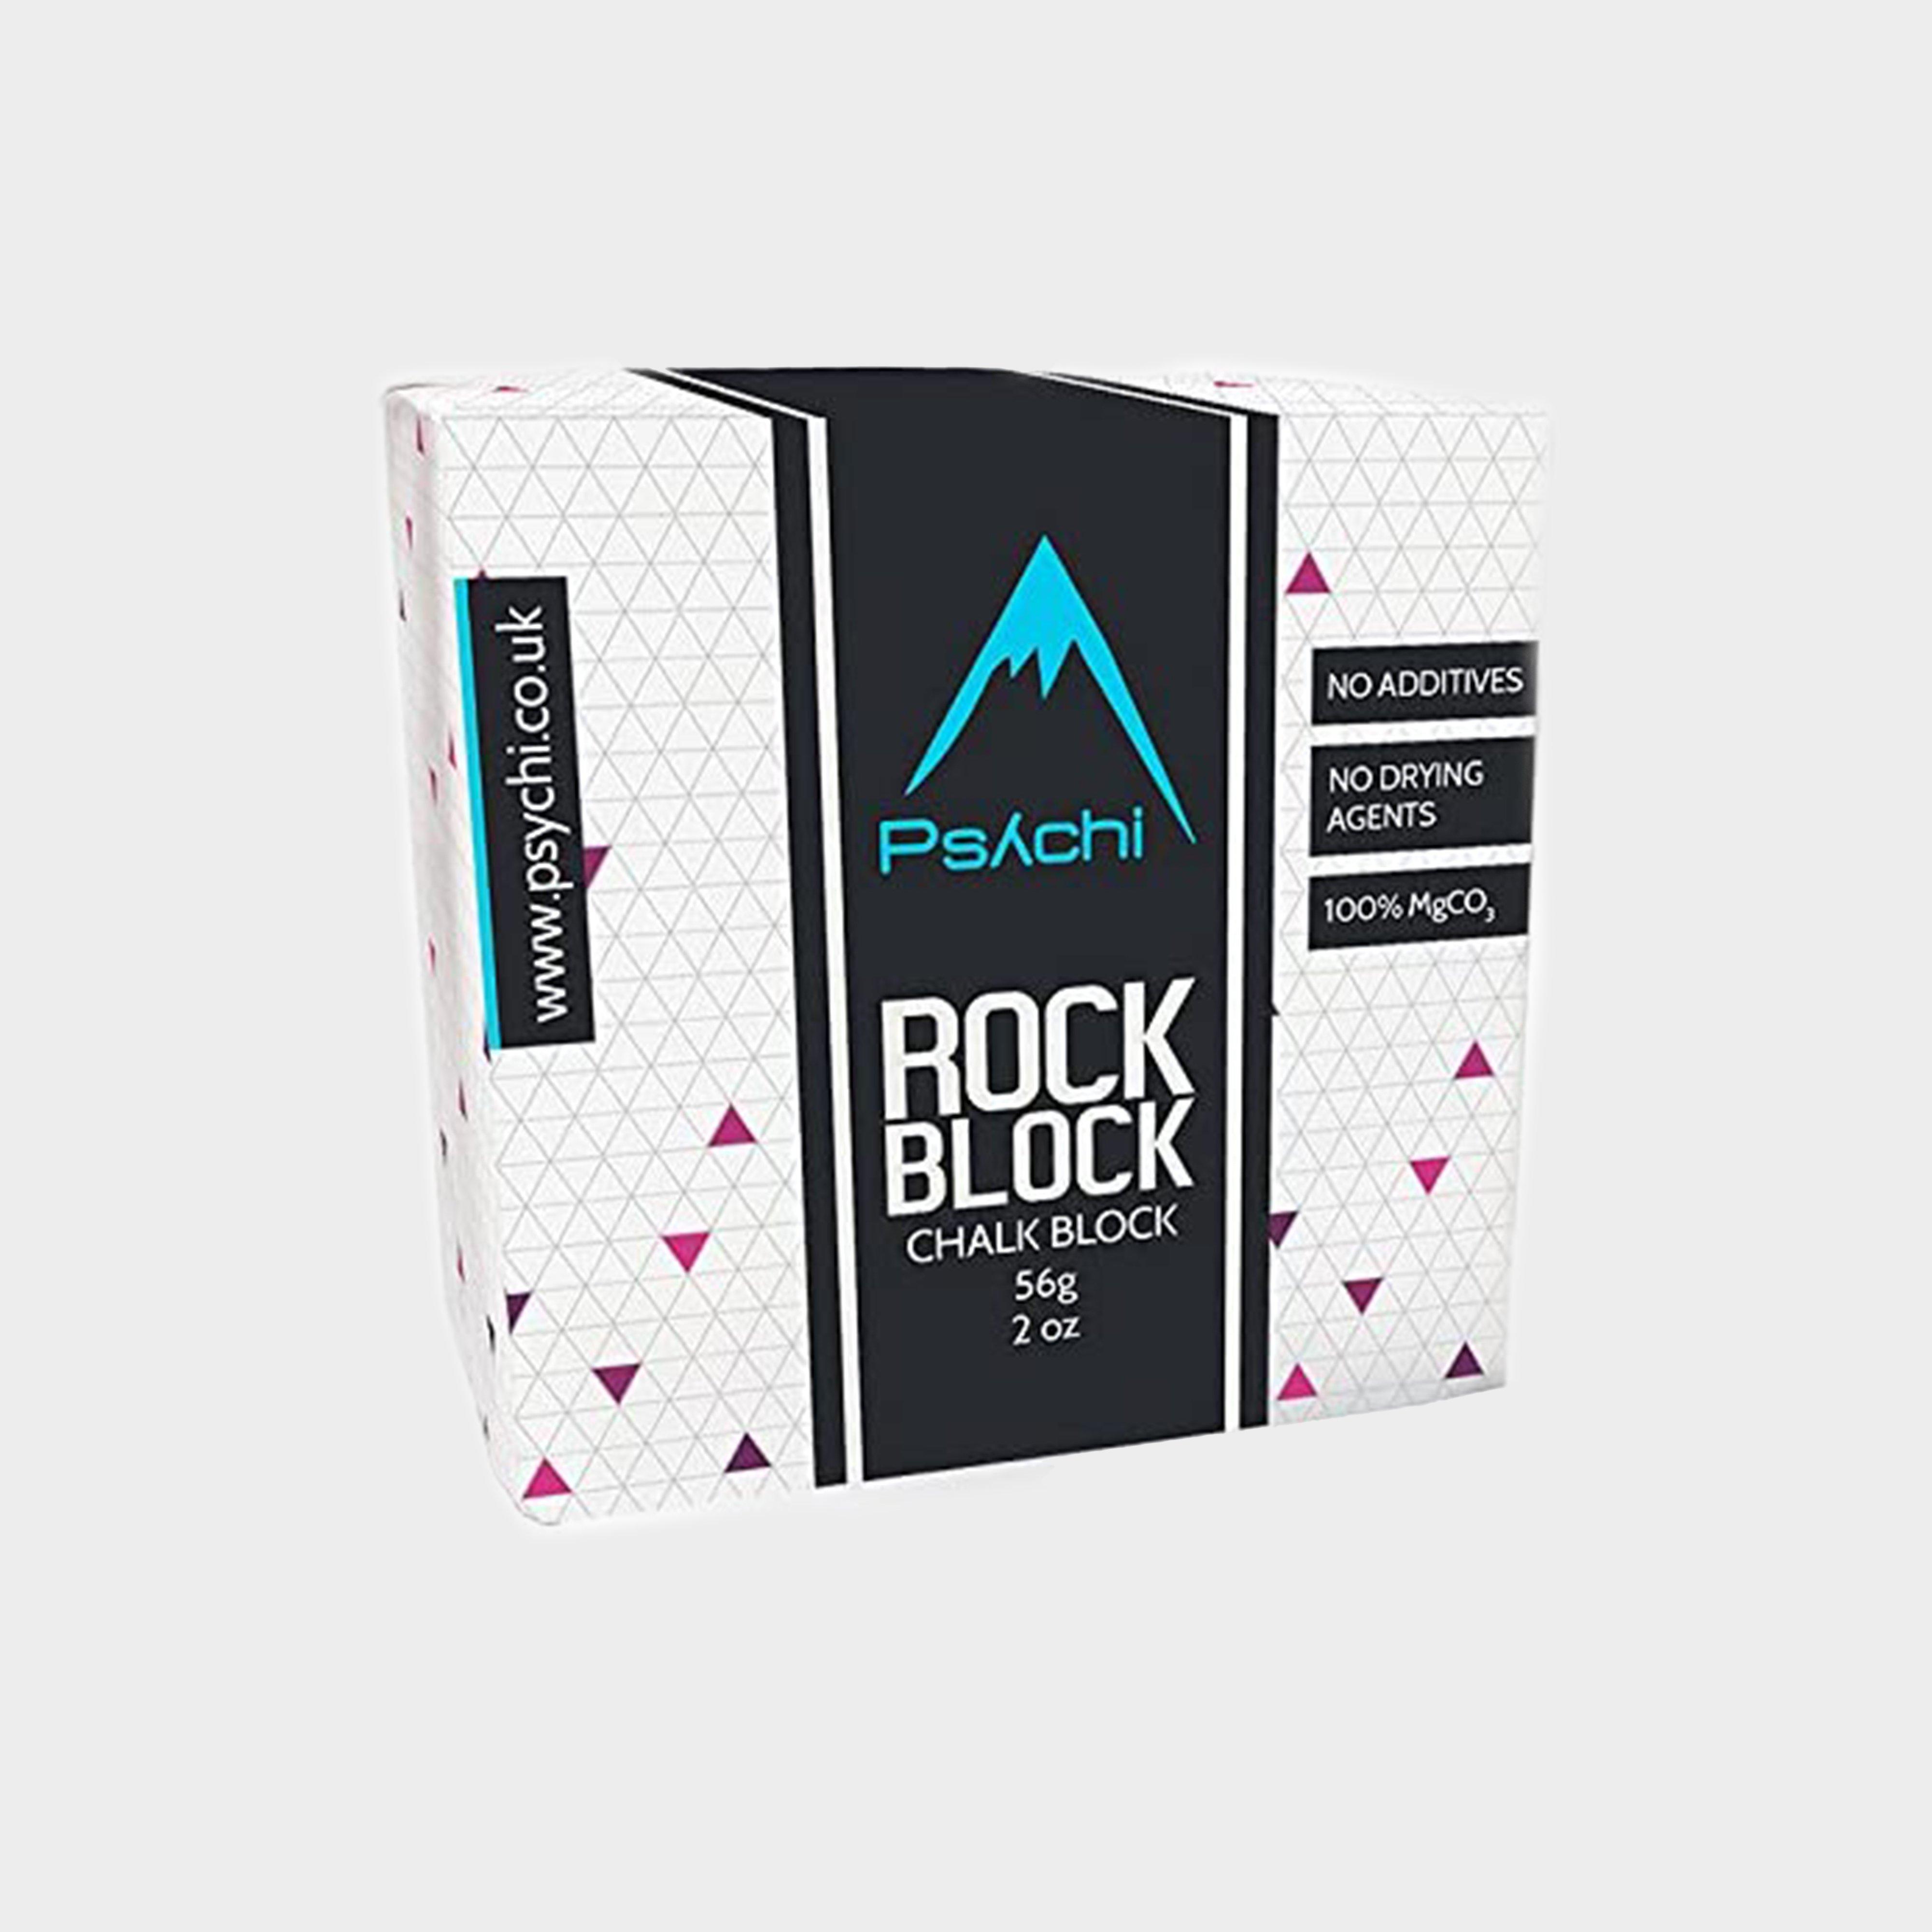 Psychi Rock Block Chalk Block - Block/block  Block/block